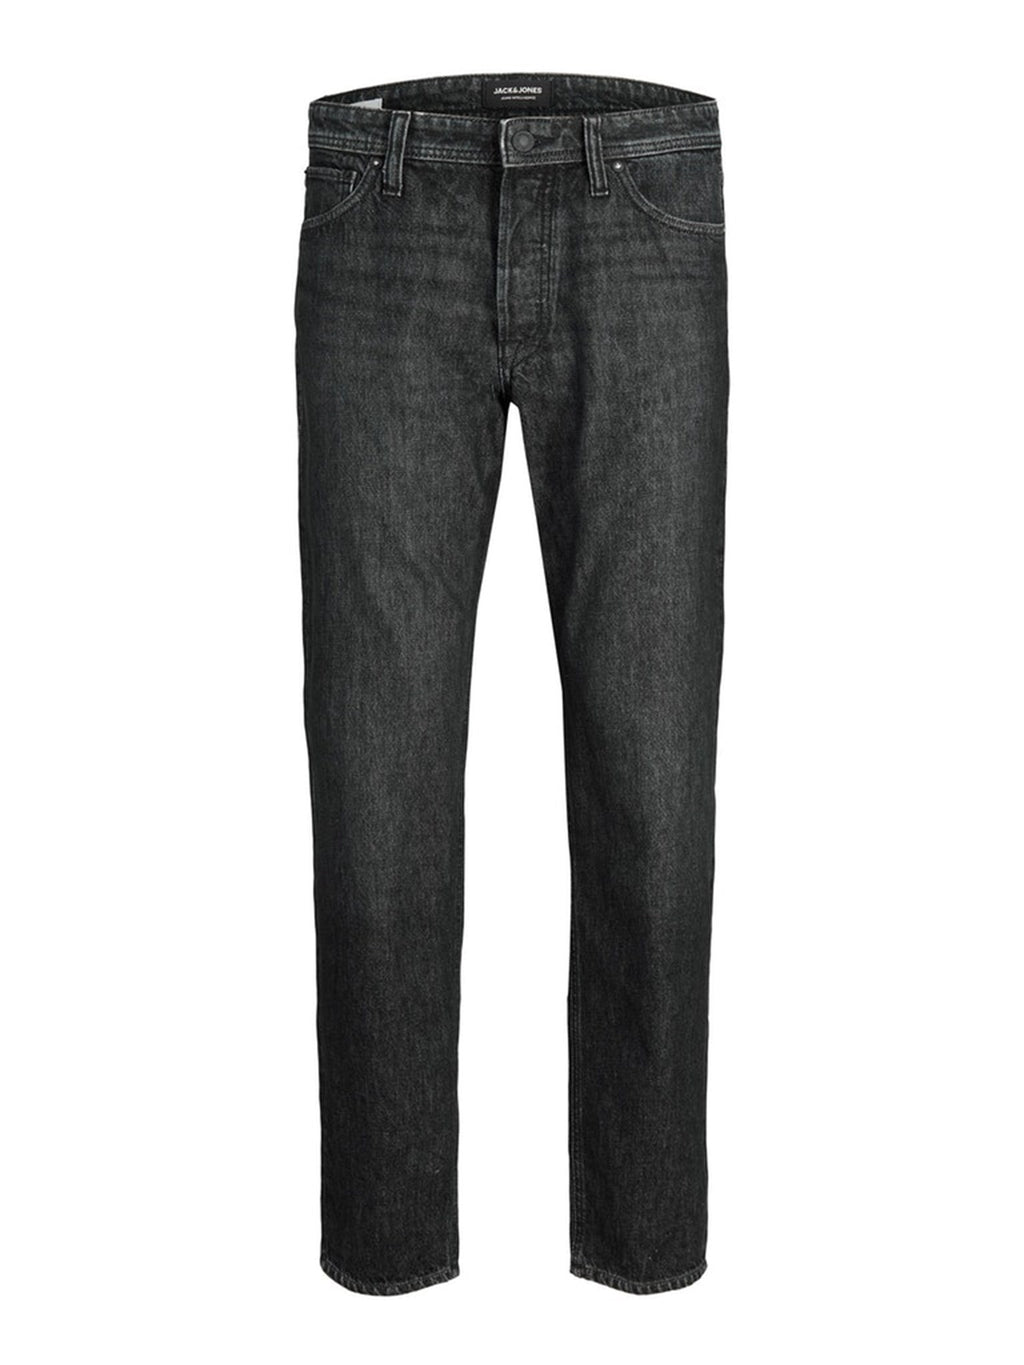 Chris Original Jeans MF993 - Black Denim